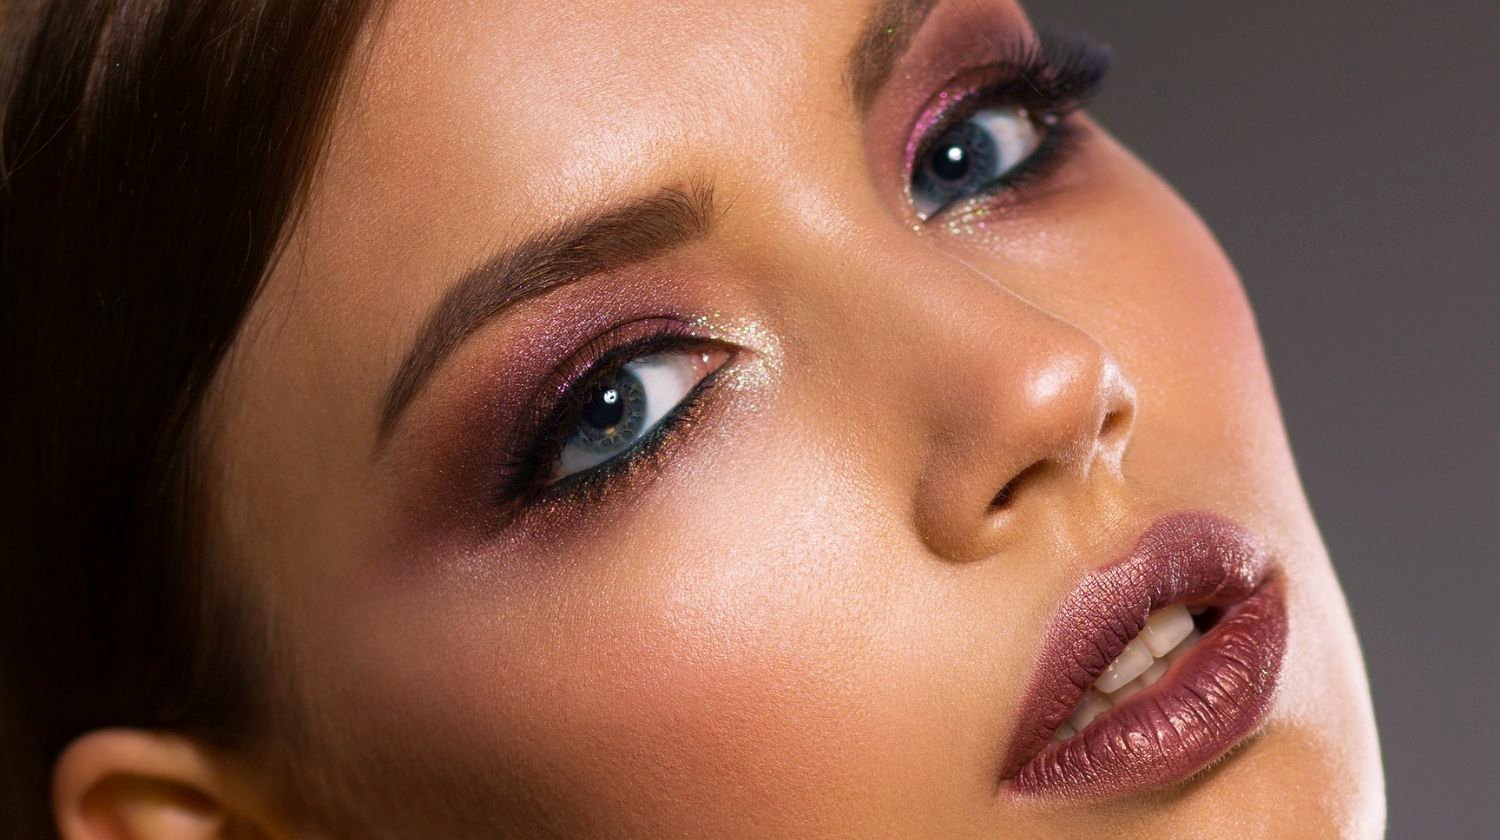 https://makeuptutorials.com/wp-content/uploads/2018/03/woman-in-dark-glittery-plum-eyeshadow-smokey-eye-us-feature.jpg